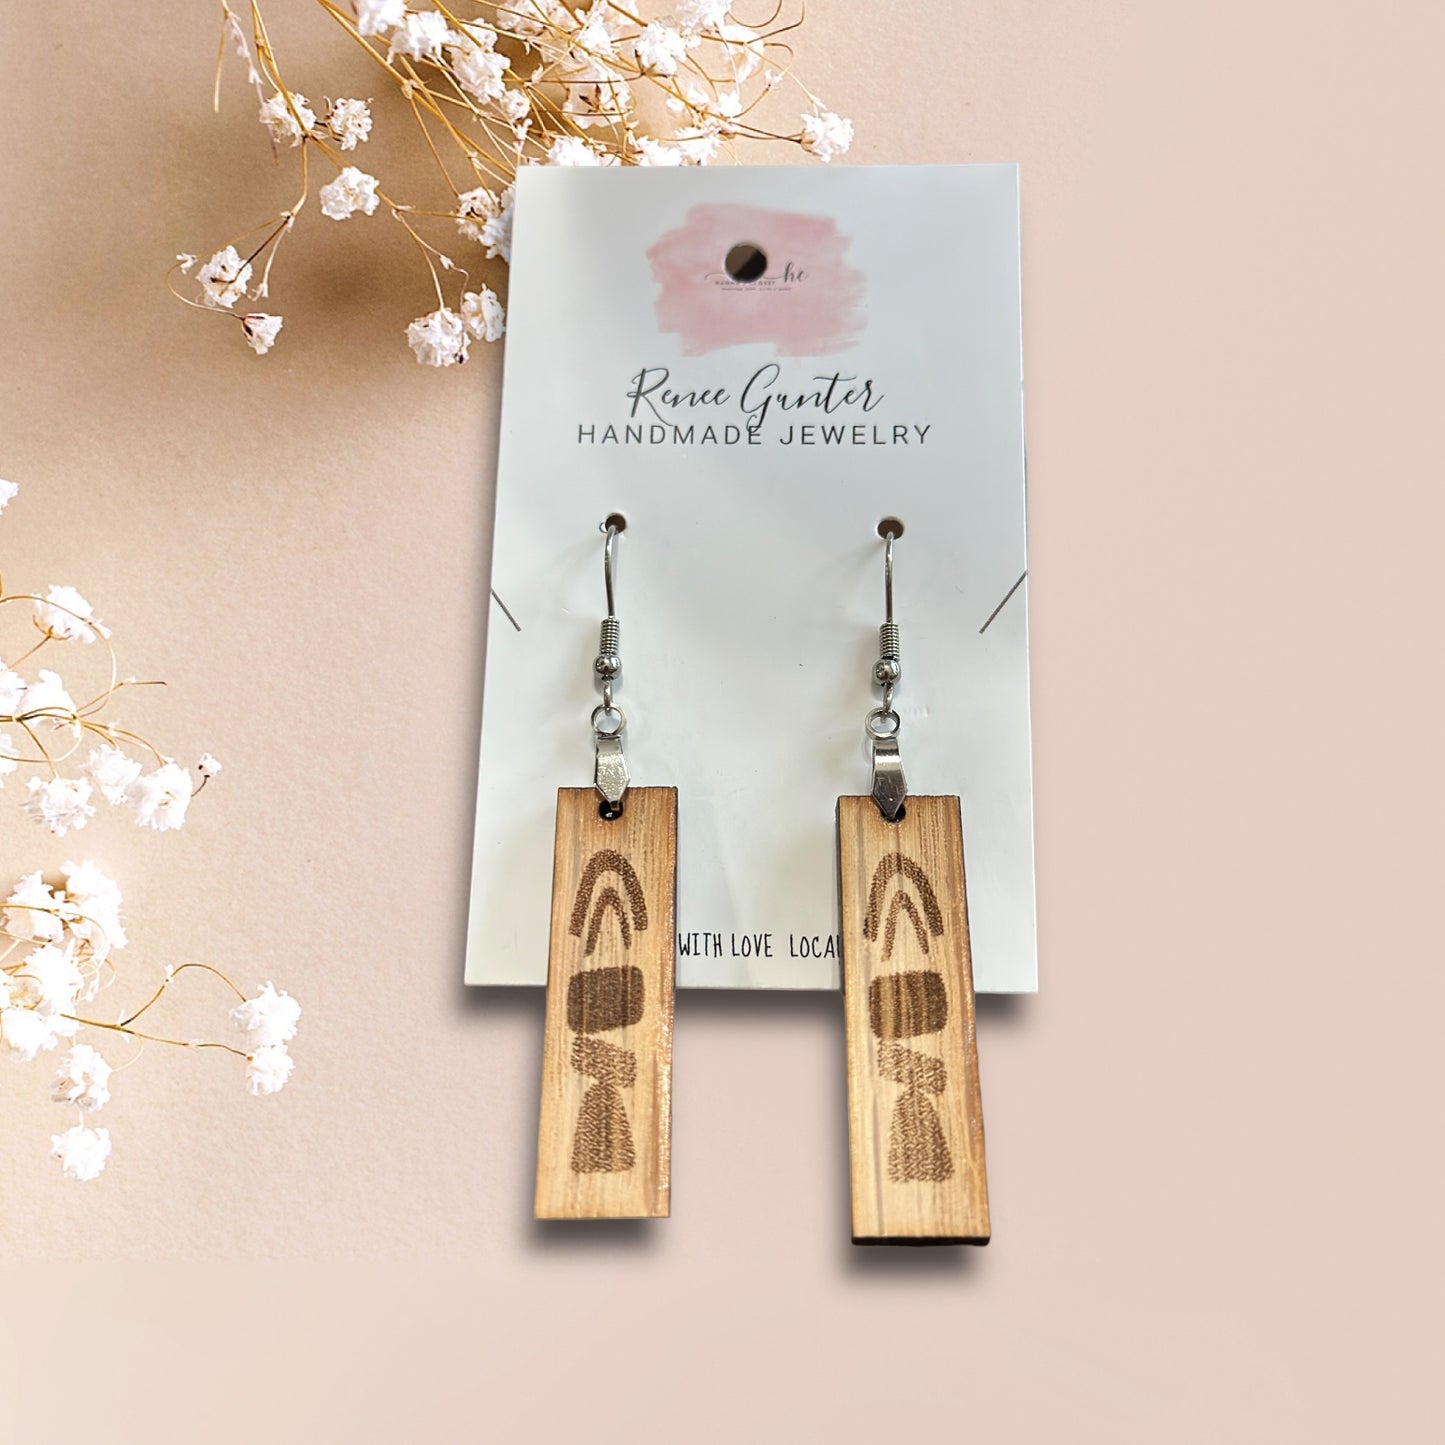 Handmade wood single layer earrings